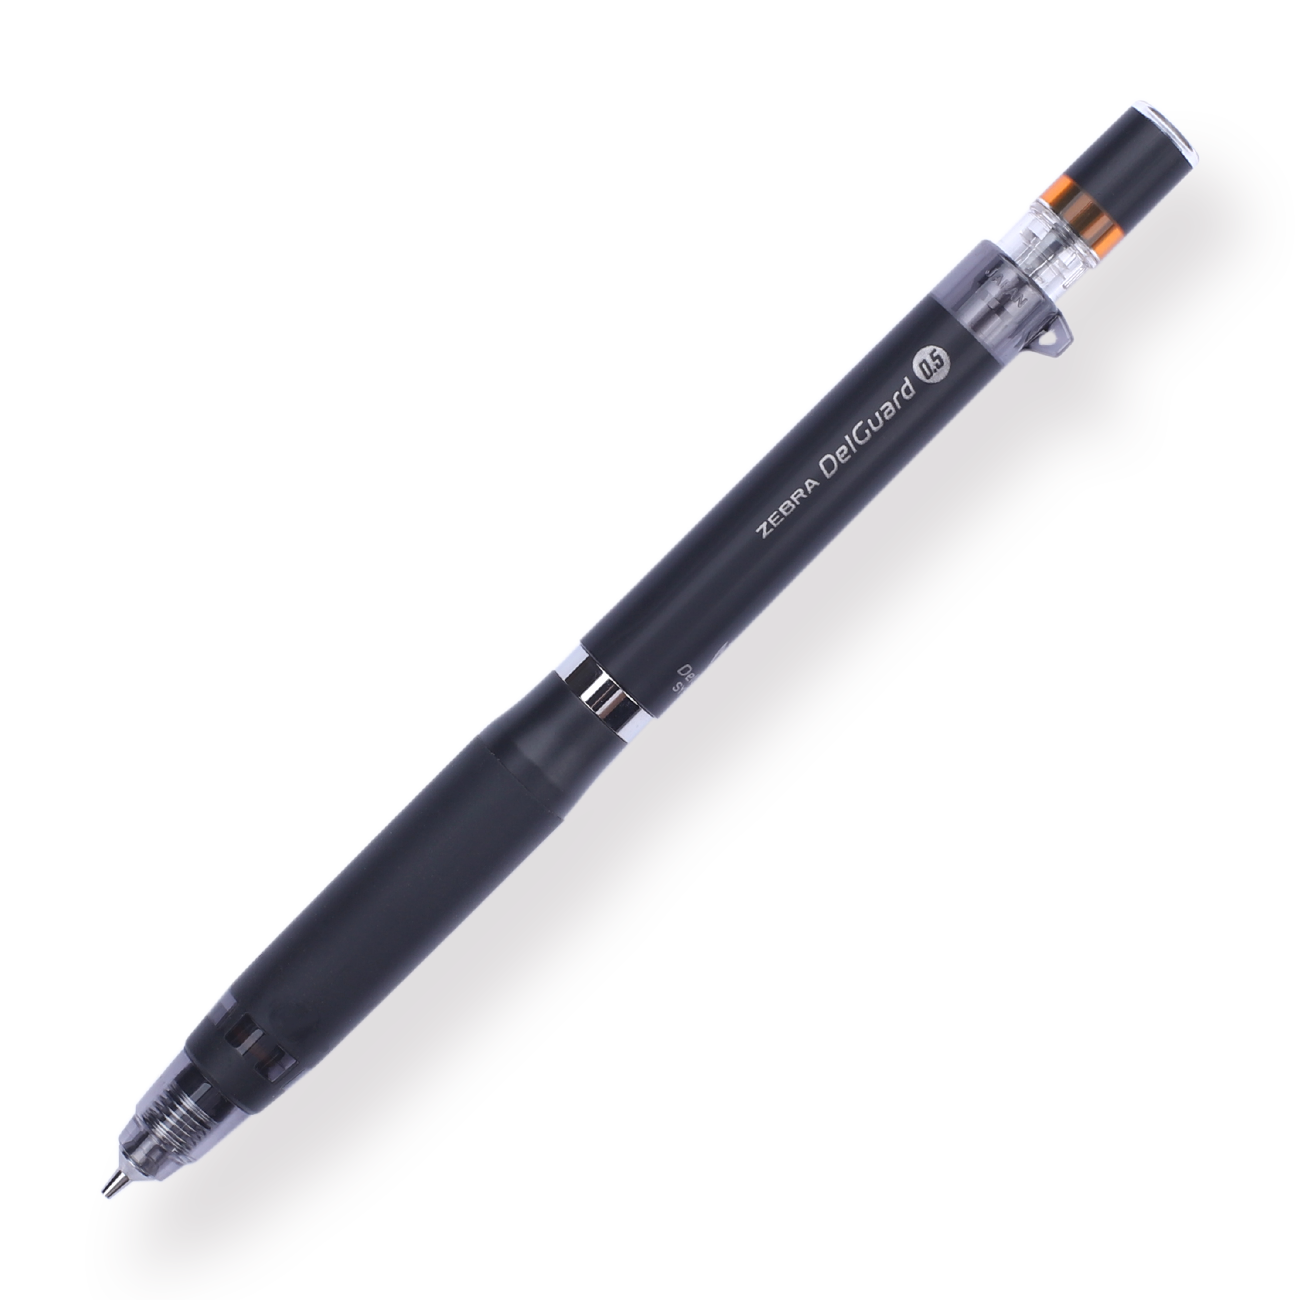 Zebra DelGuard Type ER Mechanical Pencil  - 0.5 mm - Black - Stationery Pal